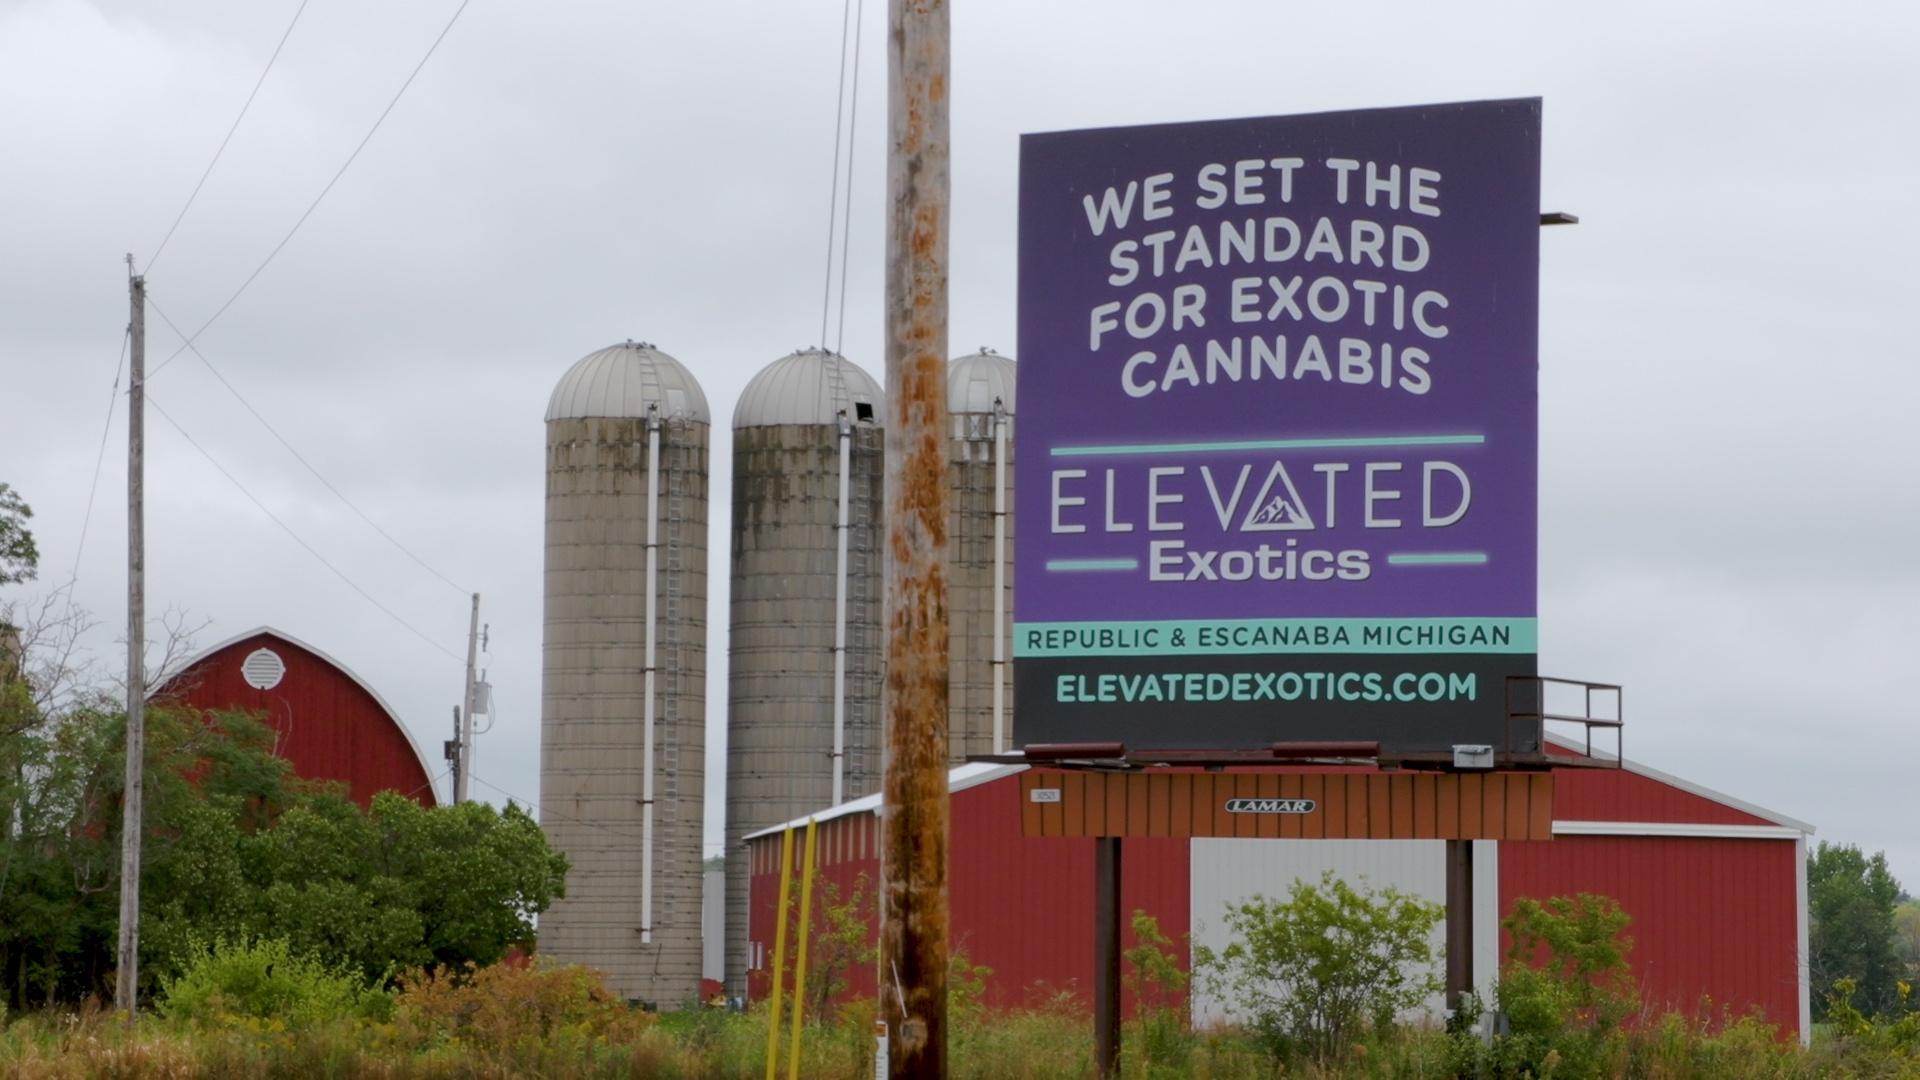 When Wisconsinites buy legal marijuana in neighboring states